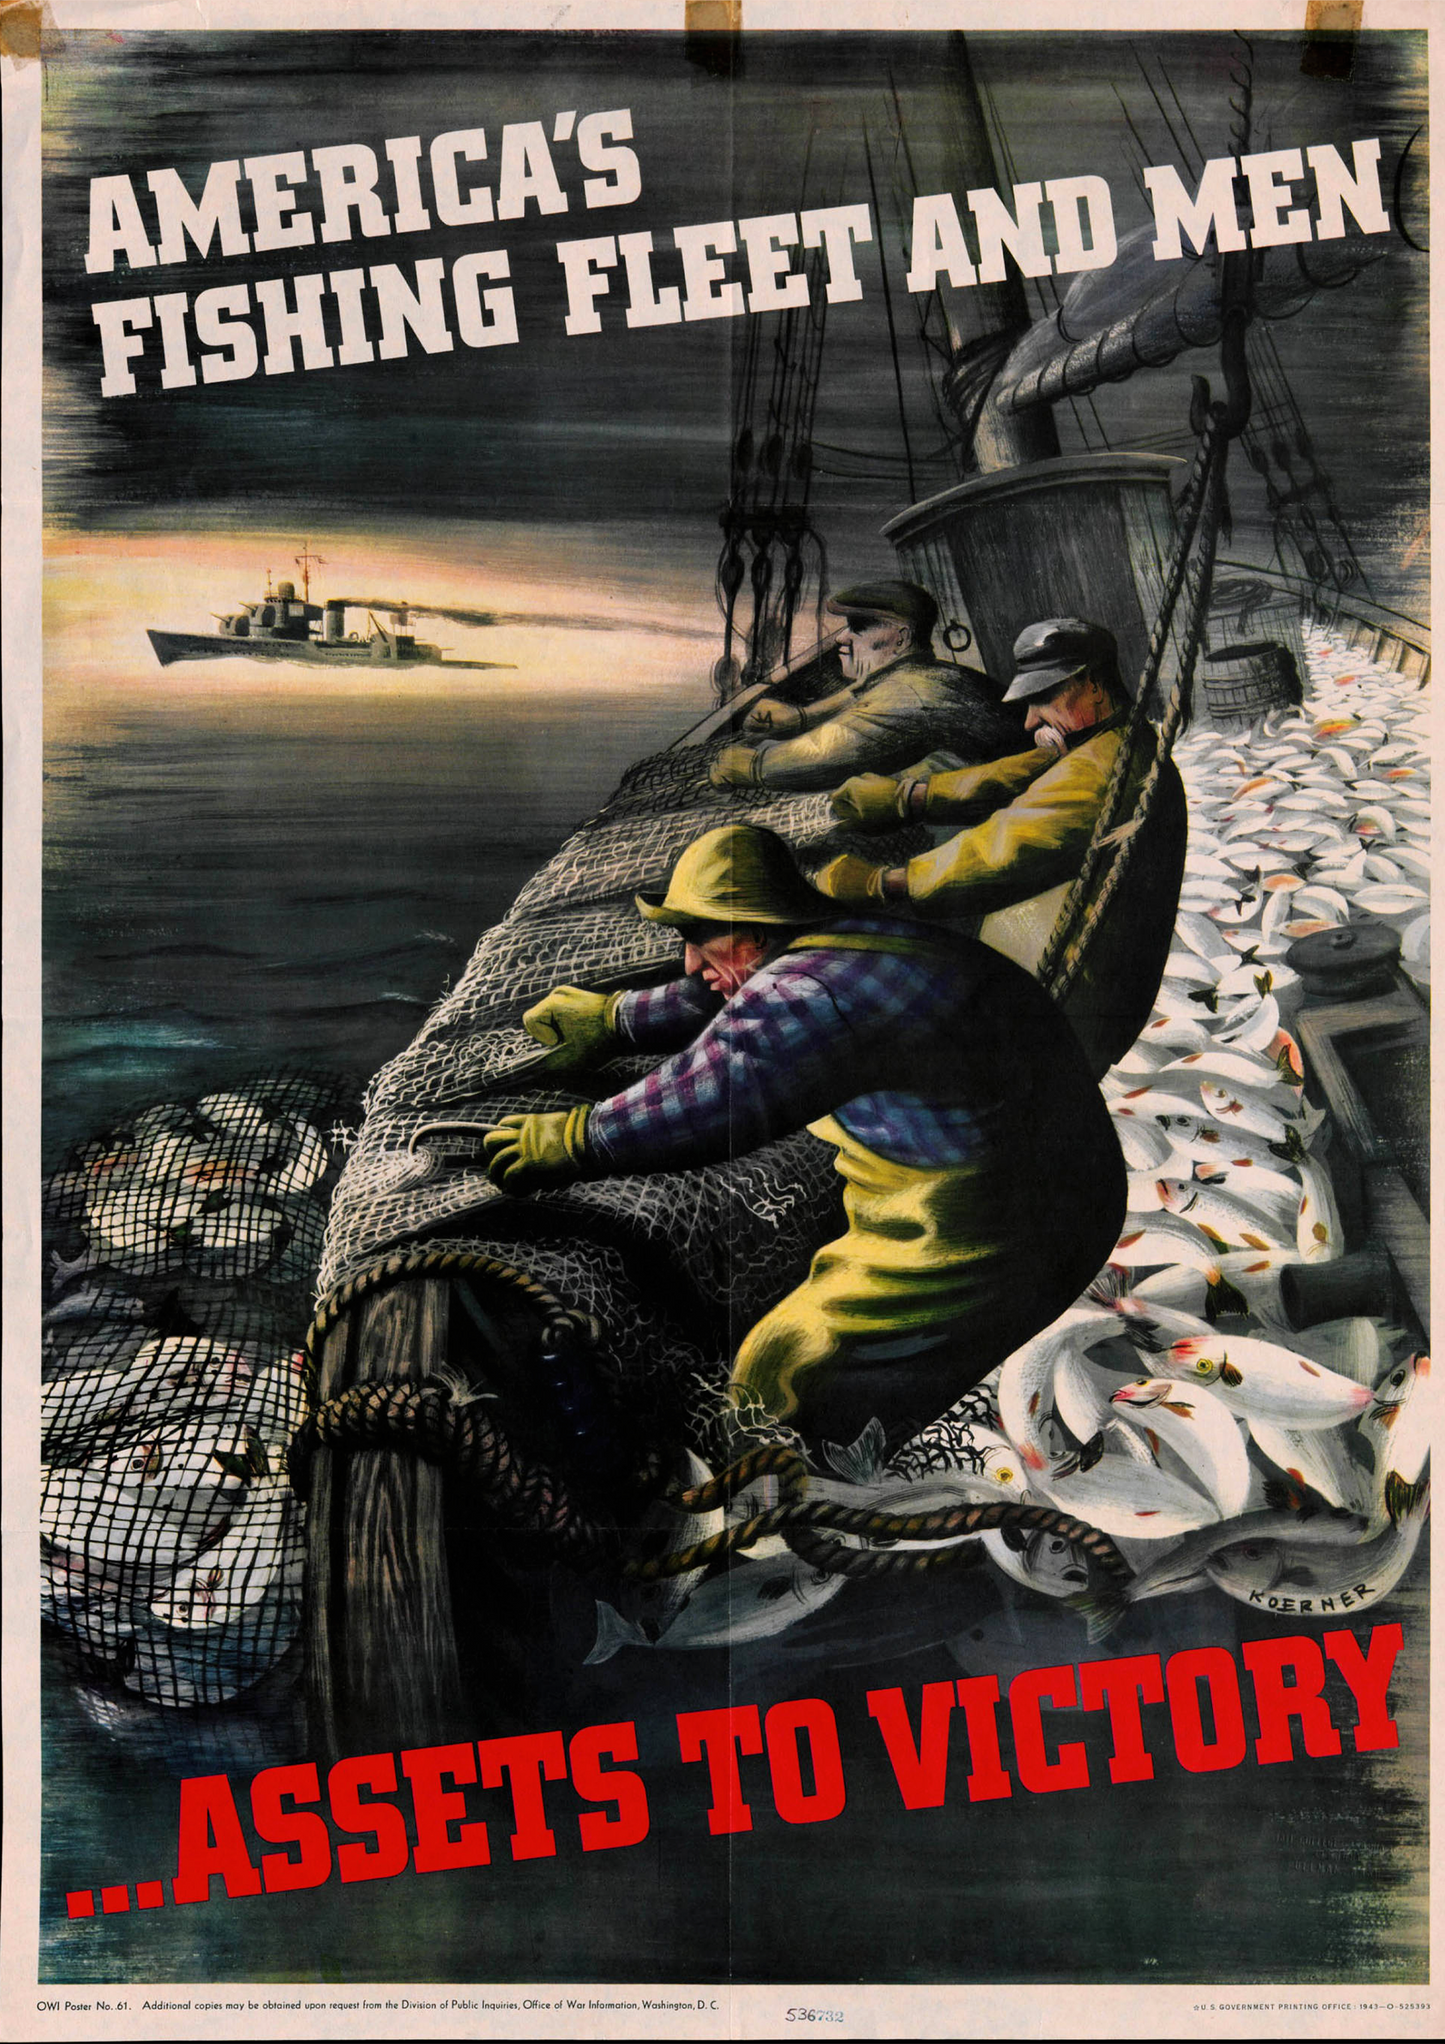 America's Fishing Fleet and Men Poster